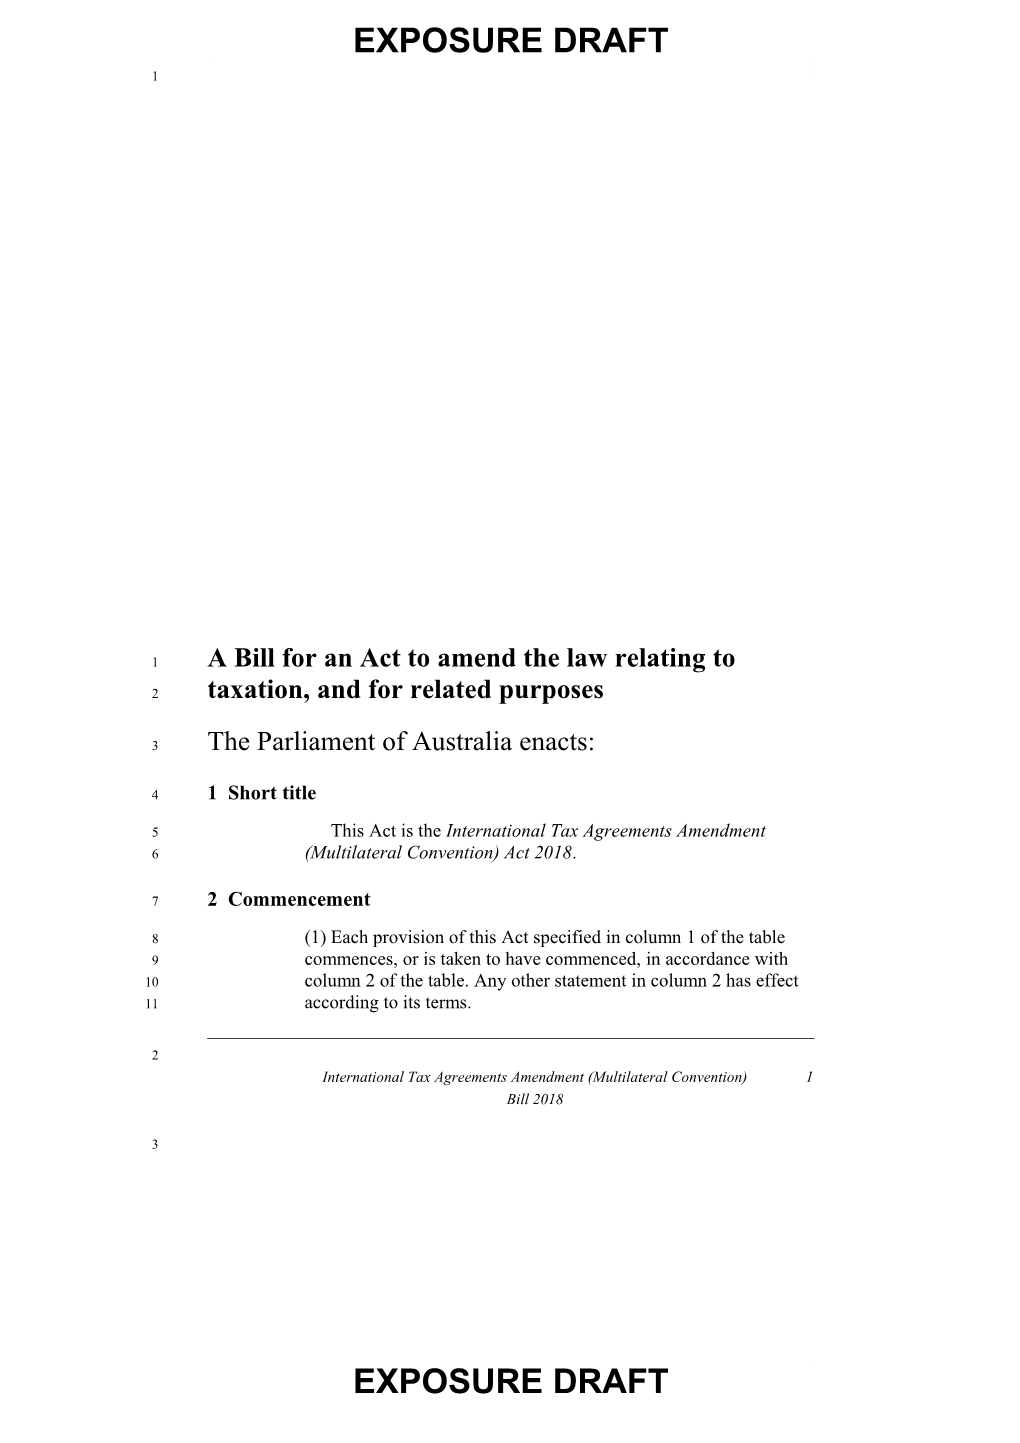 International Tax Agreements Amendment (Multilateral Convention) Bill2018